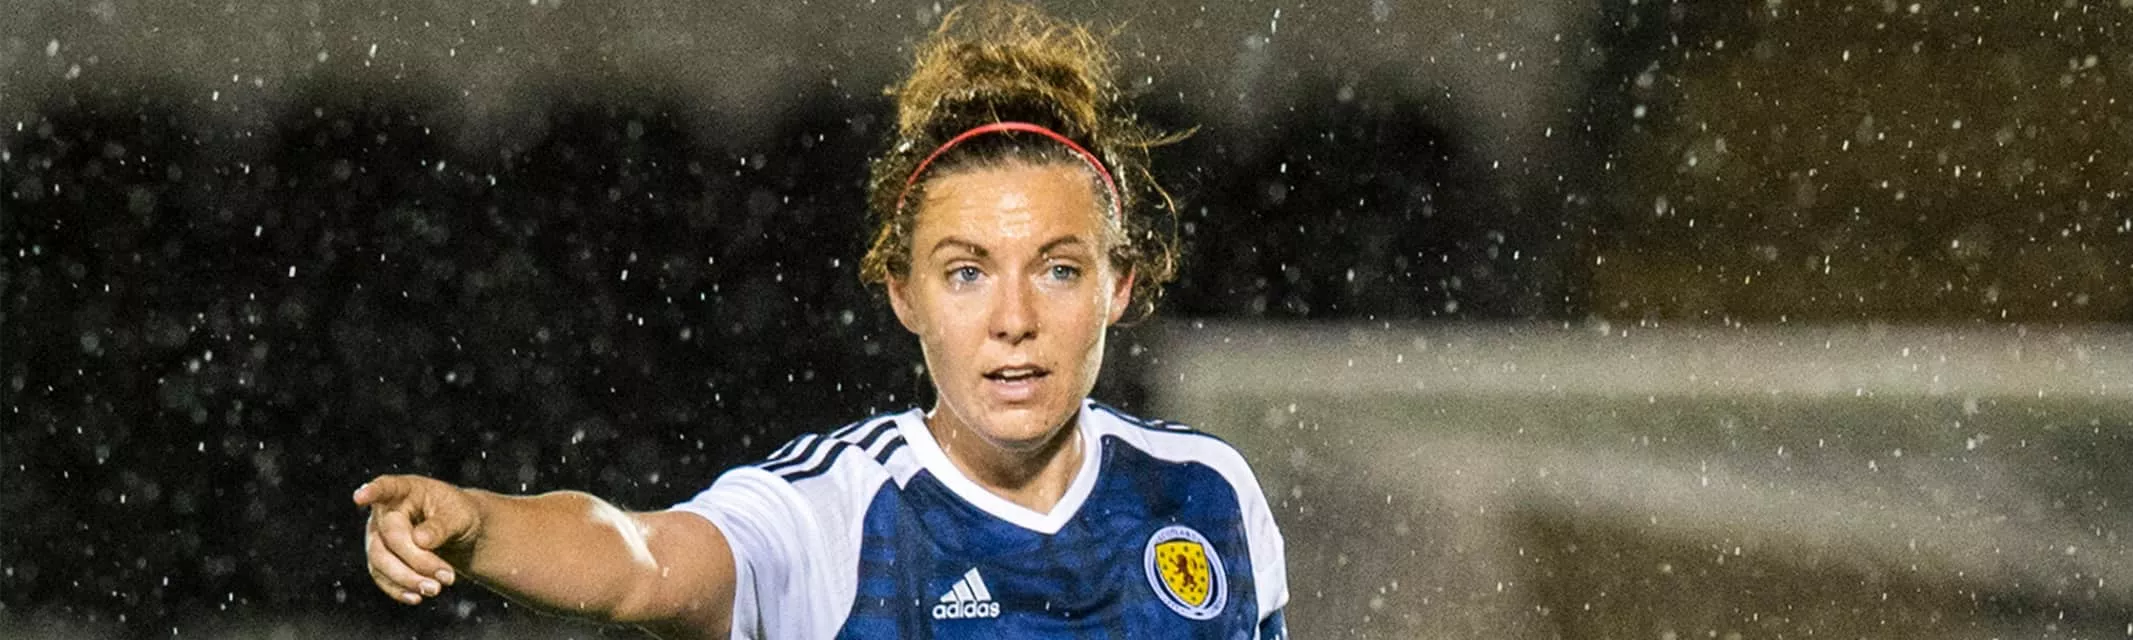 Rachel Corsie - Scottish soccer player